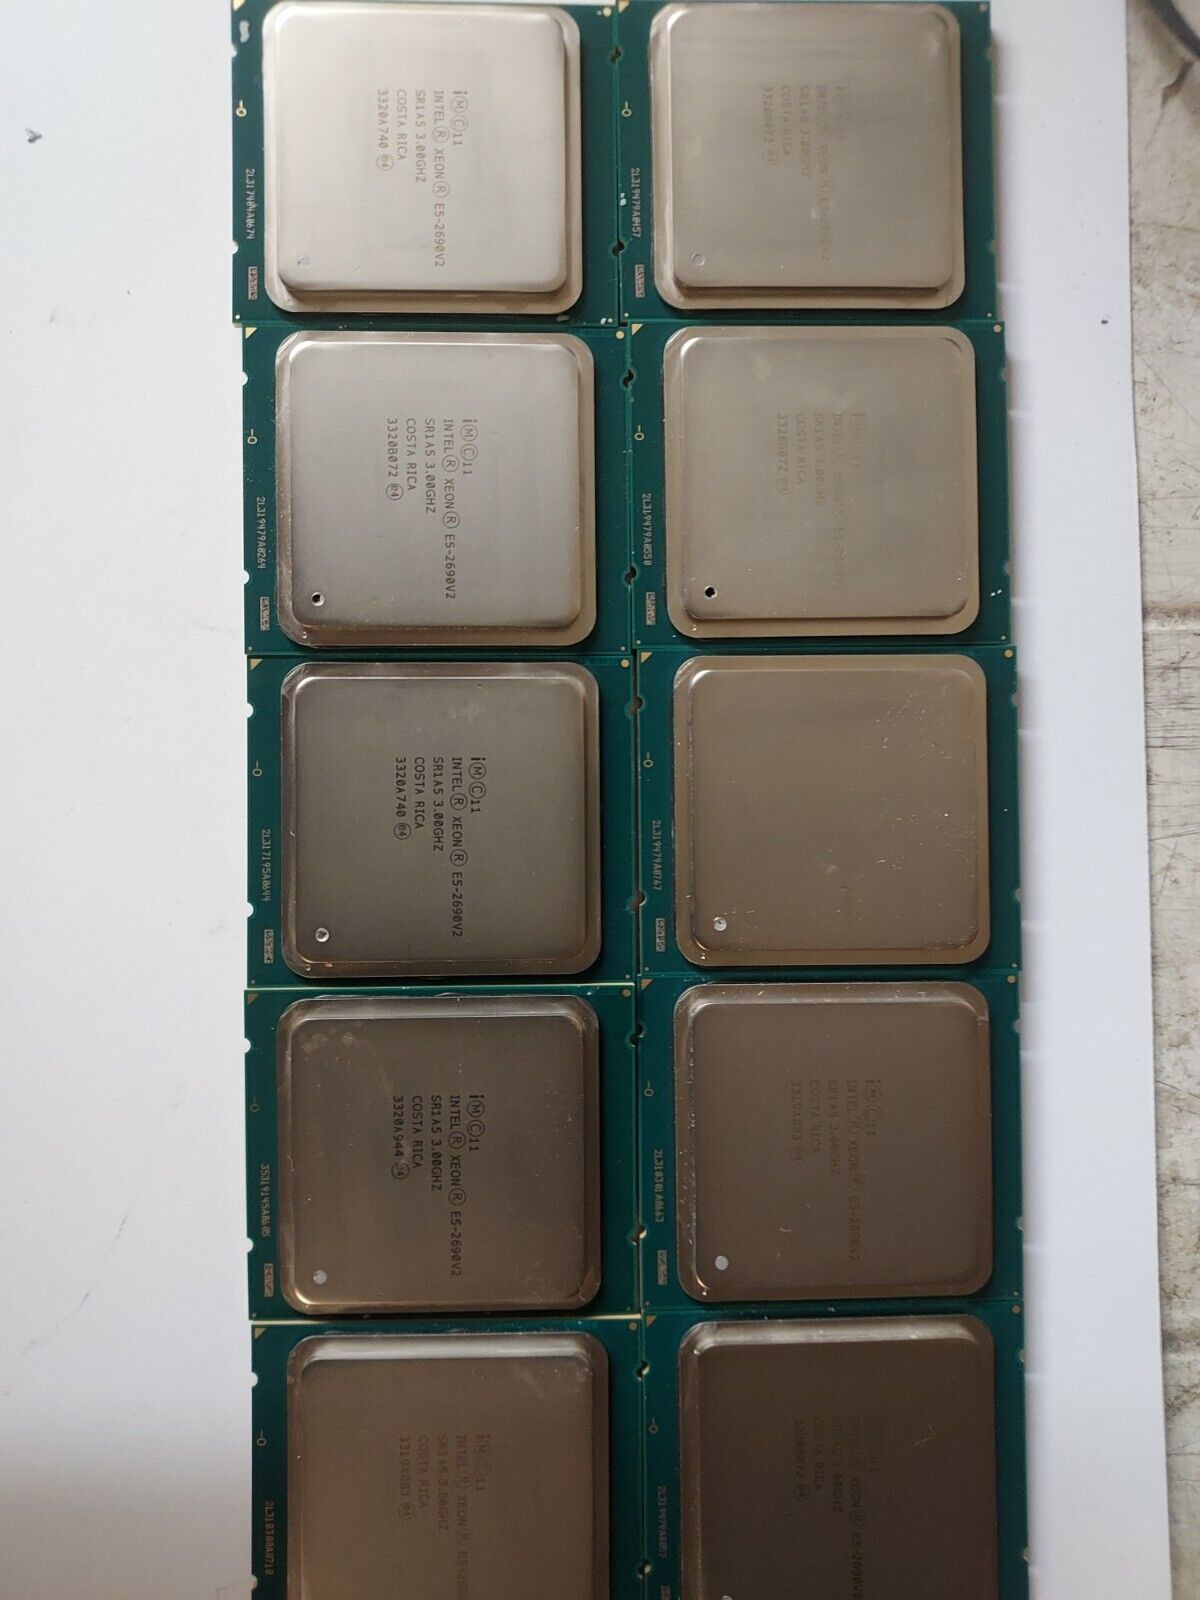 LOT OF 10 Intel Xeon E5-2690 V2 10-Core 3.00GHz CPU Server Processor LGA2011 